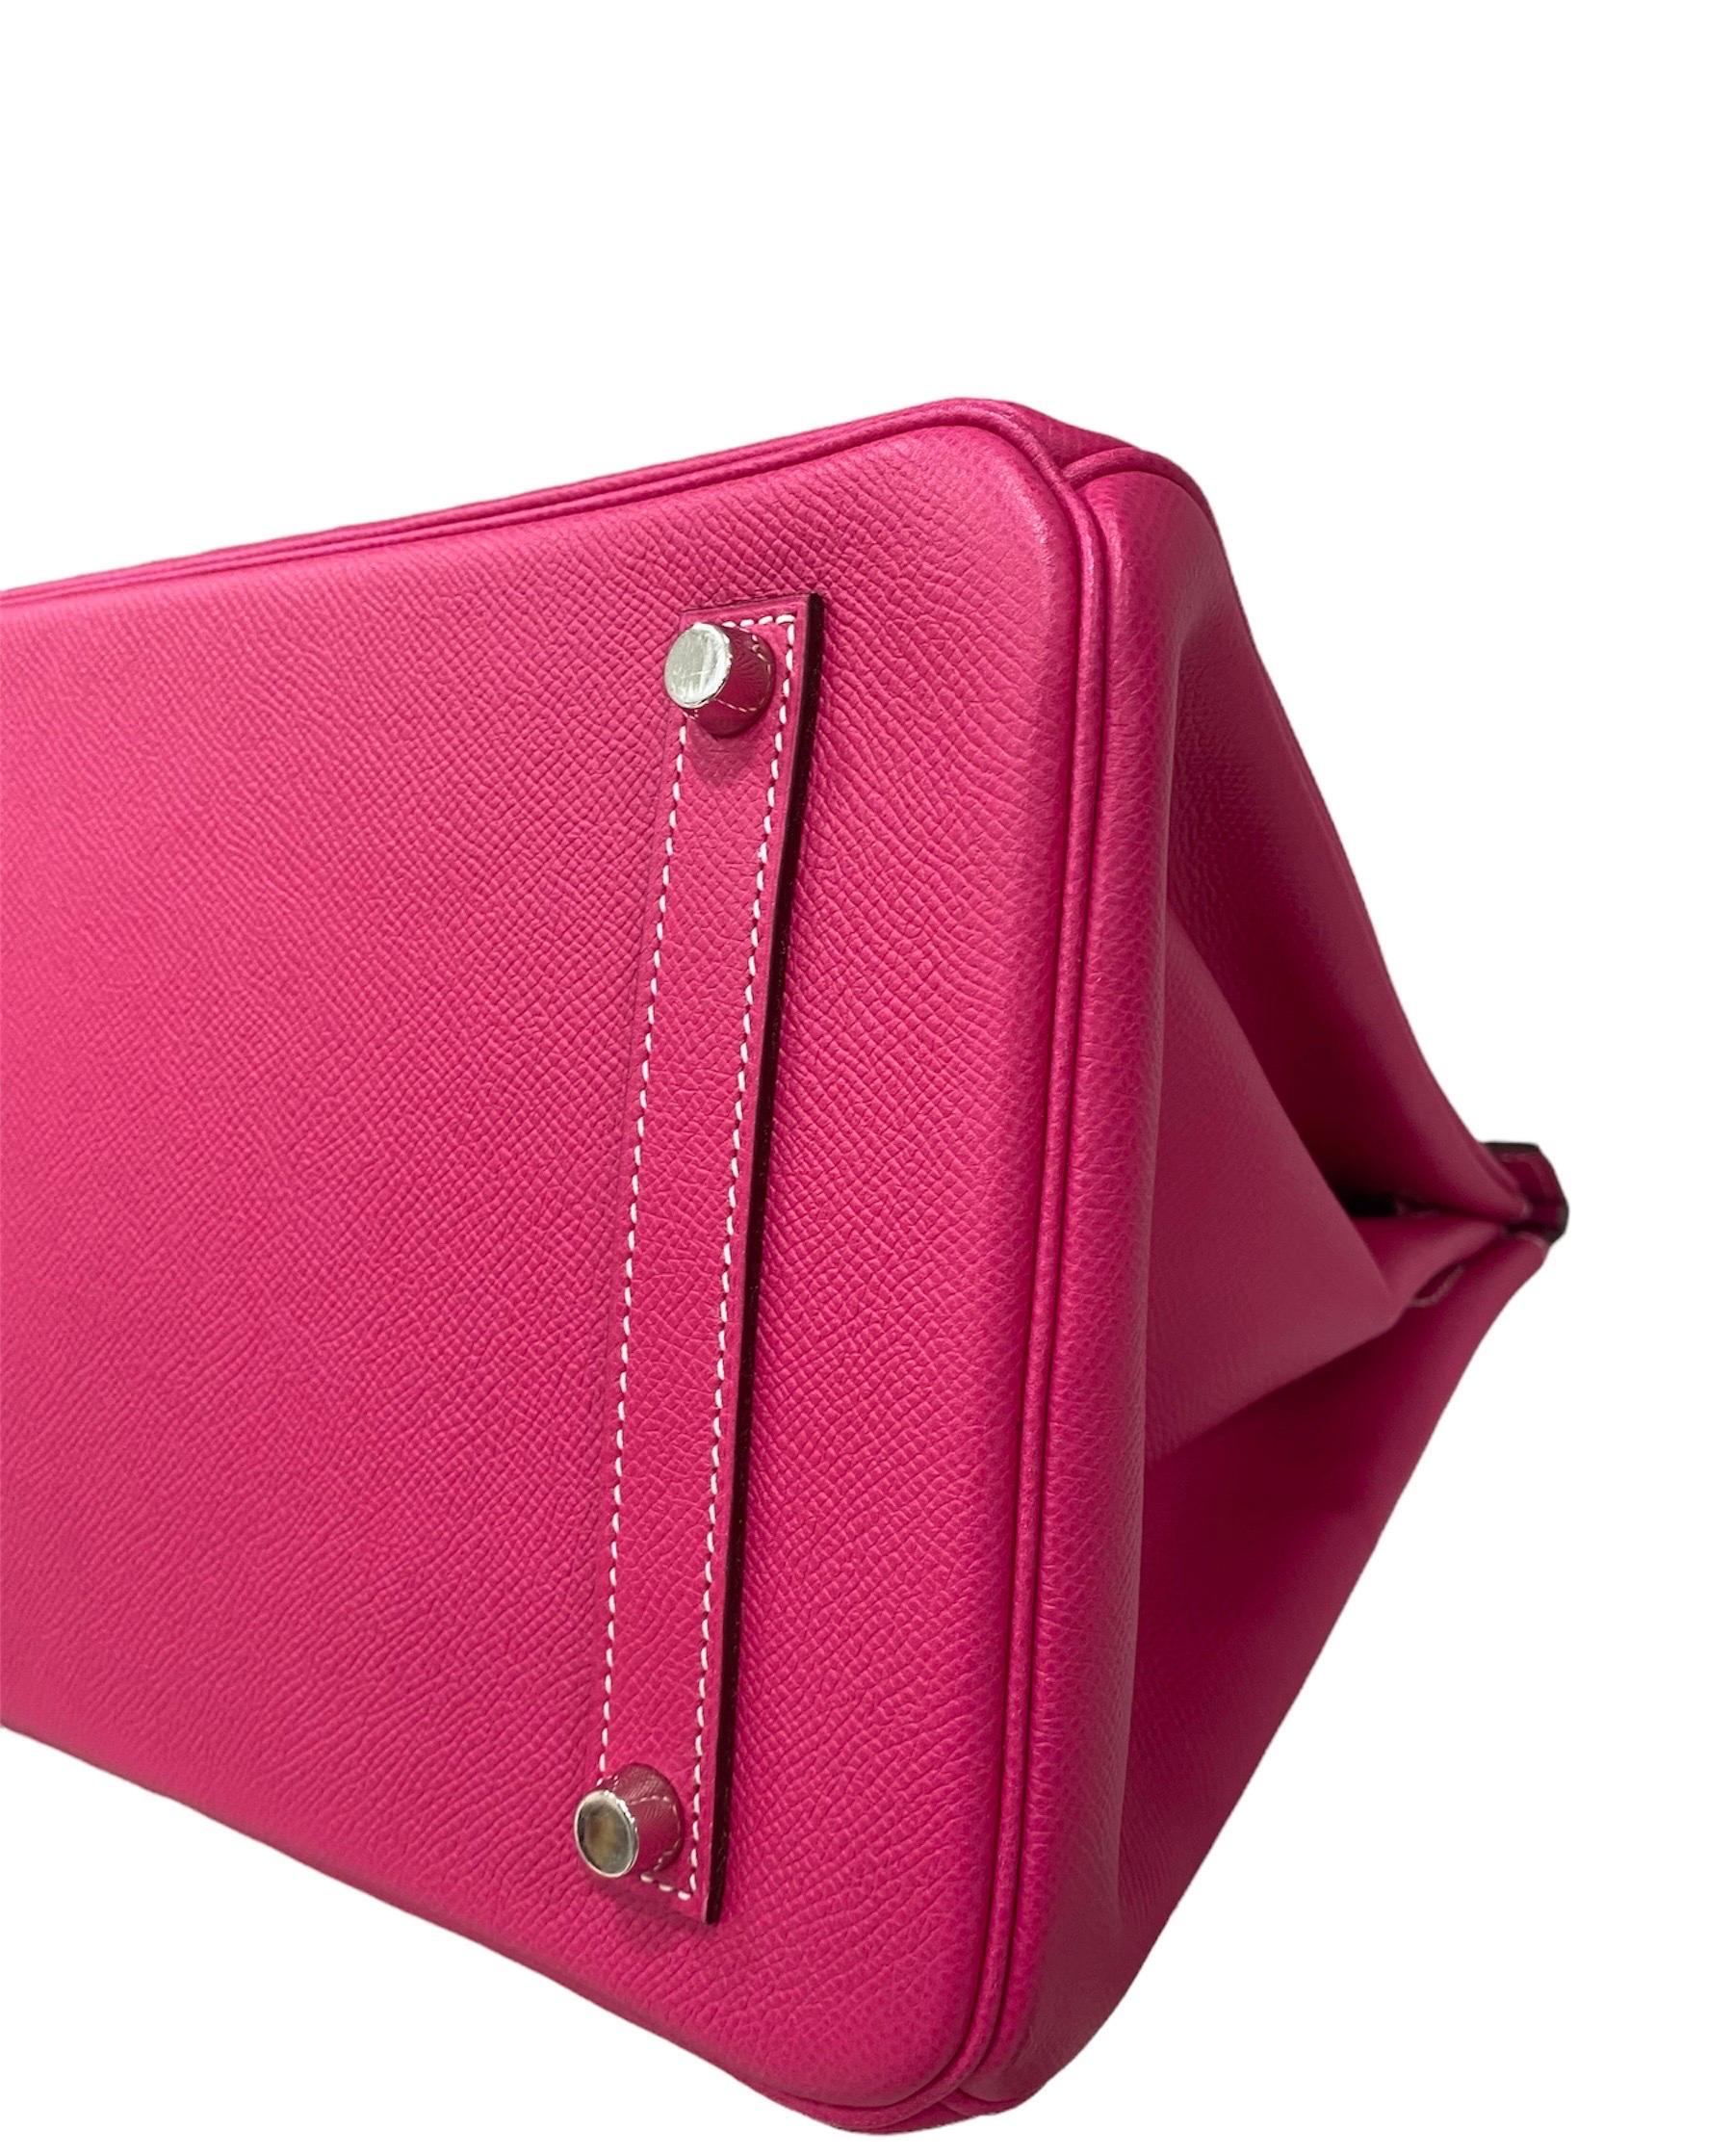 2013 Hermès Birkin 35 Epsom Leather Rose Tyrien Top Handle Bag 2